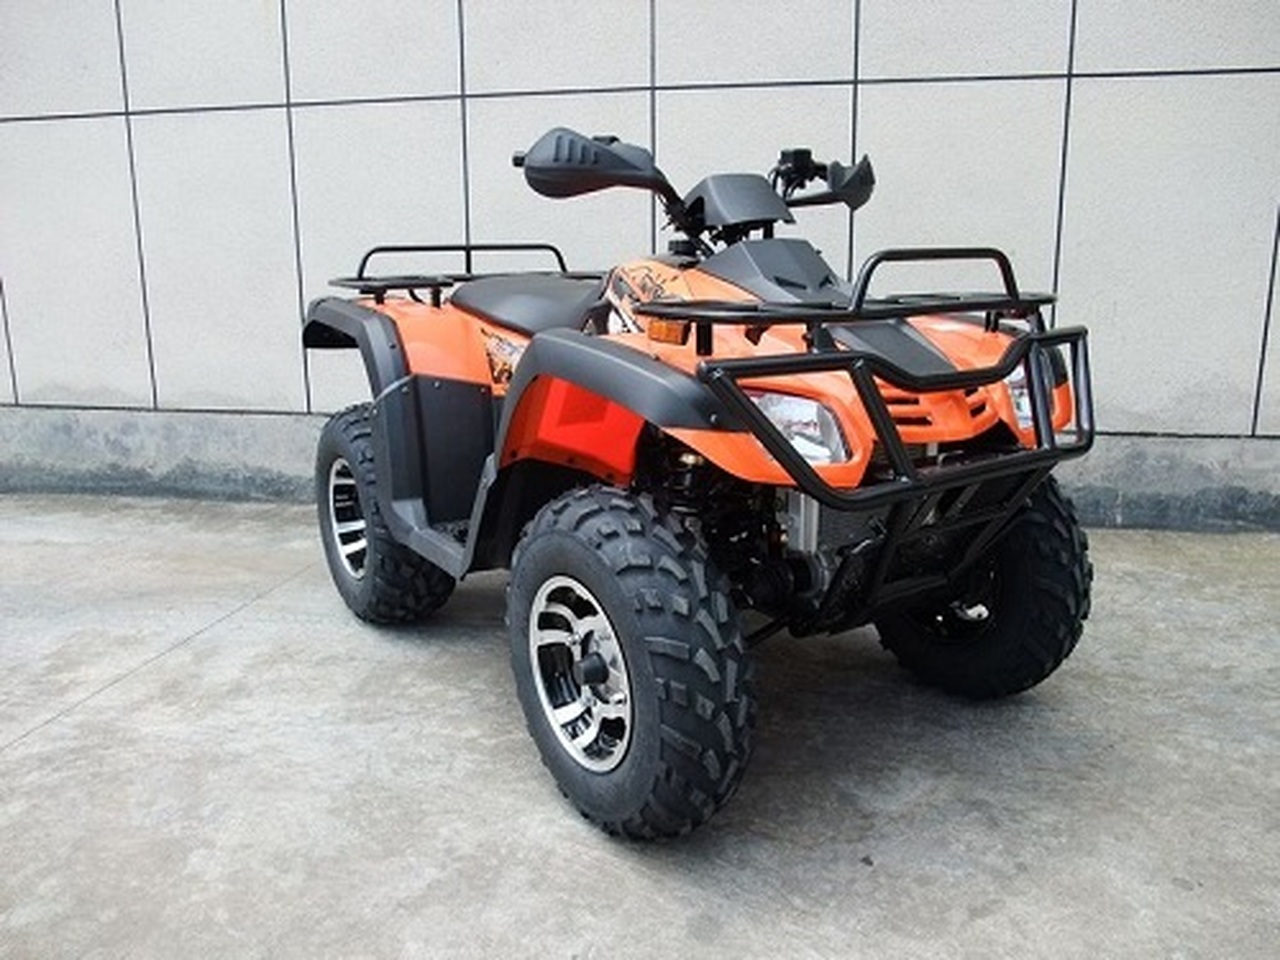 Vitacci Monster 300 cc ATV